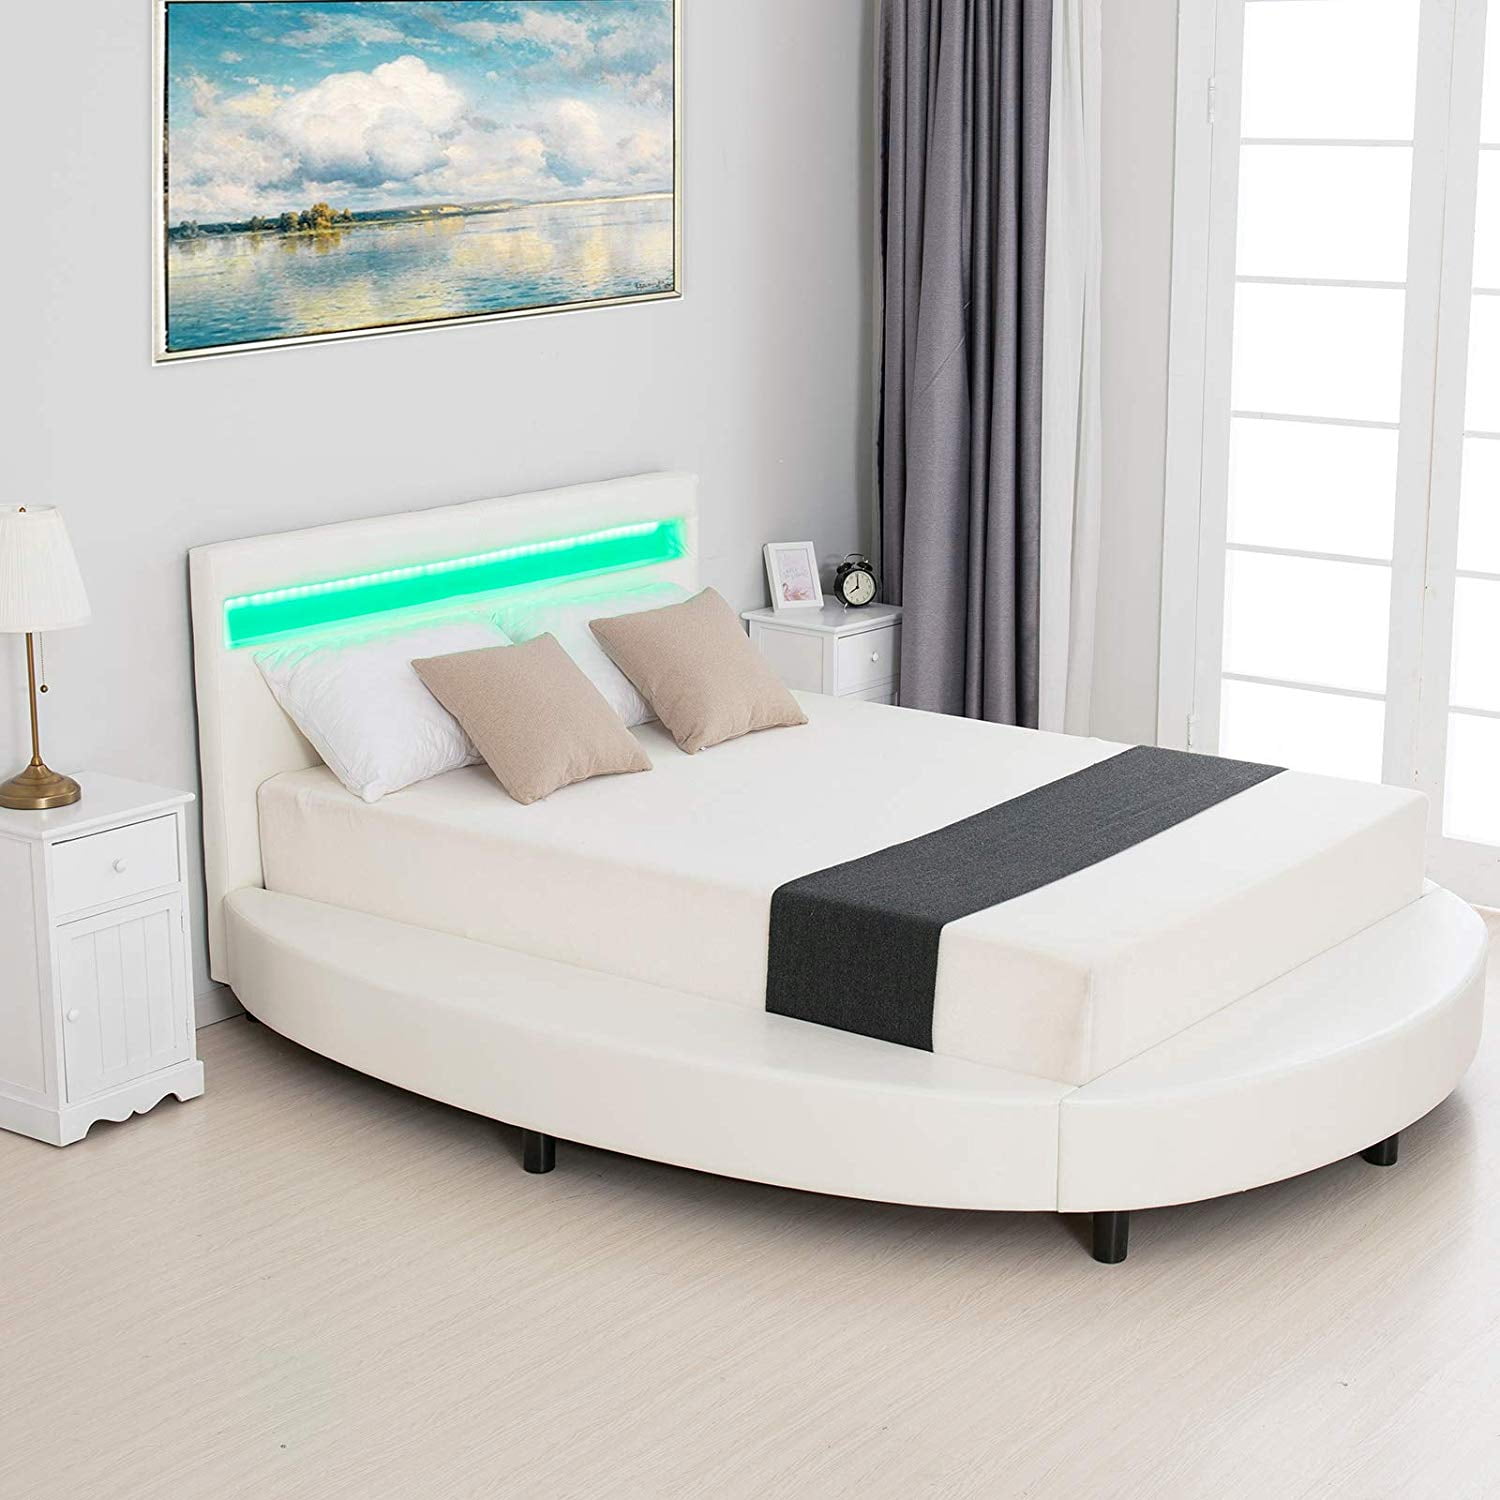 Mecor Modern Upholstered Round Platform, White Leather Bed High Headboard